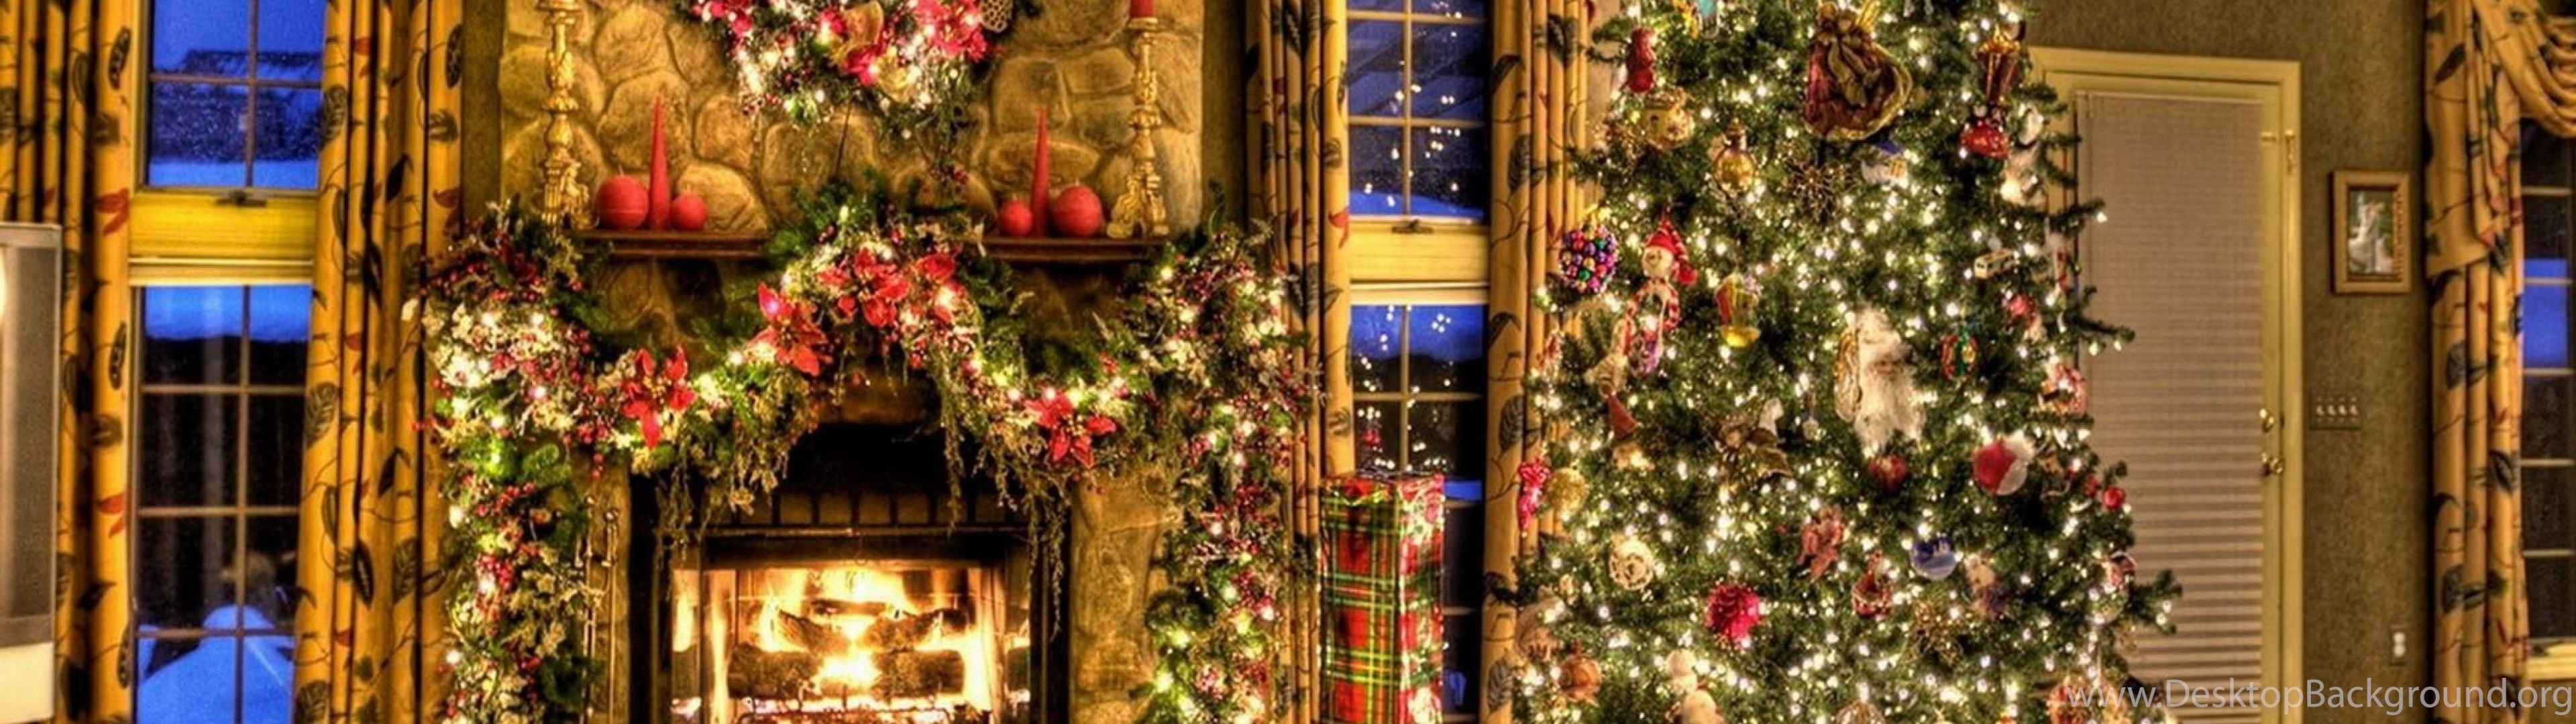 Download Wallpaper 3840x2400 Tree, Christmas, Presents, Fireplace. Desktop Background